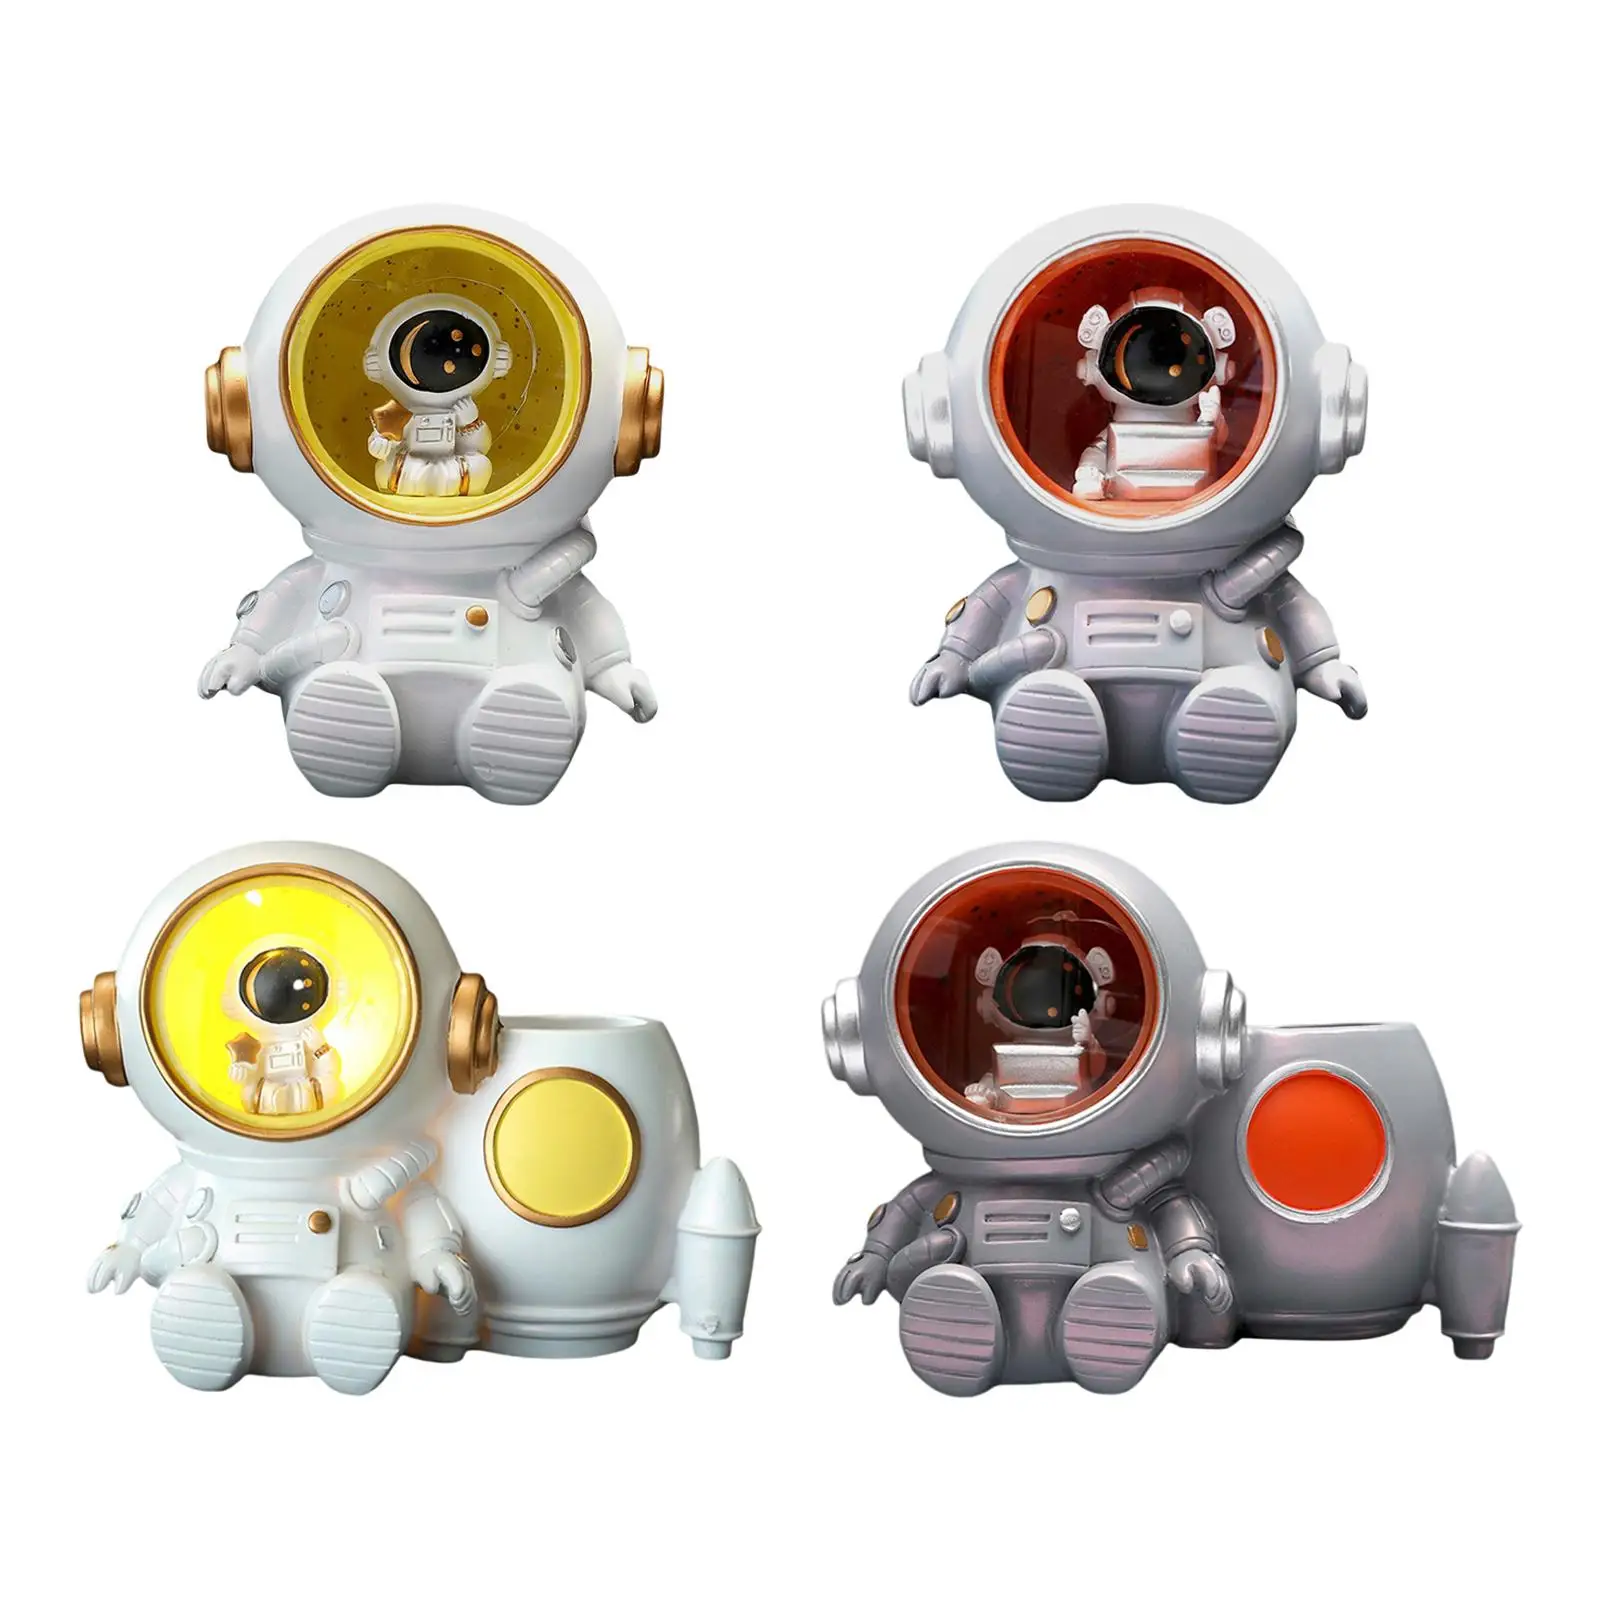 

Resin Spaceman Table Lamp Spaceman Figurines Astronaut Creative Night Light for Bedroom Living Room NightStand Birthday Gift